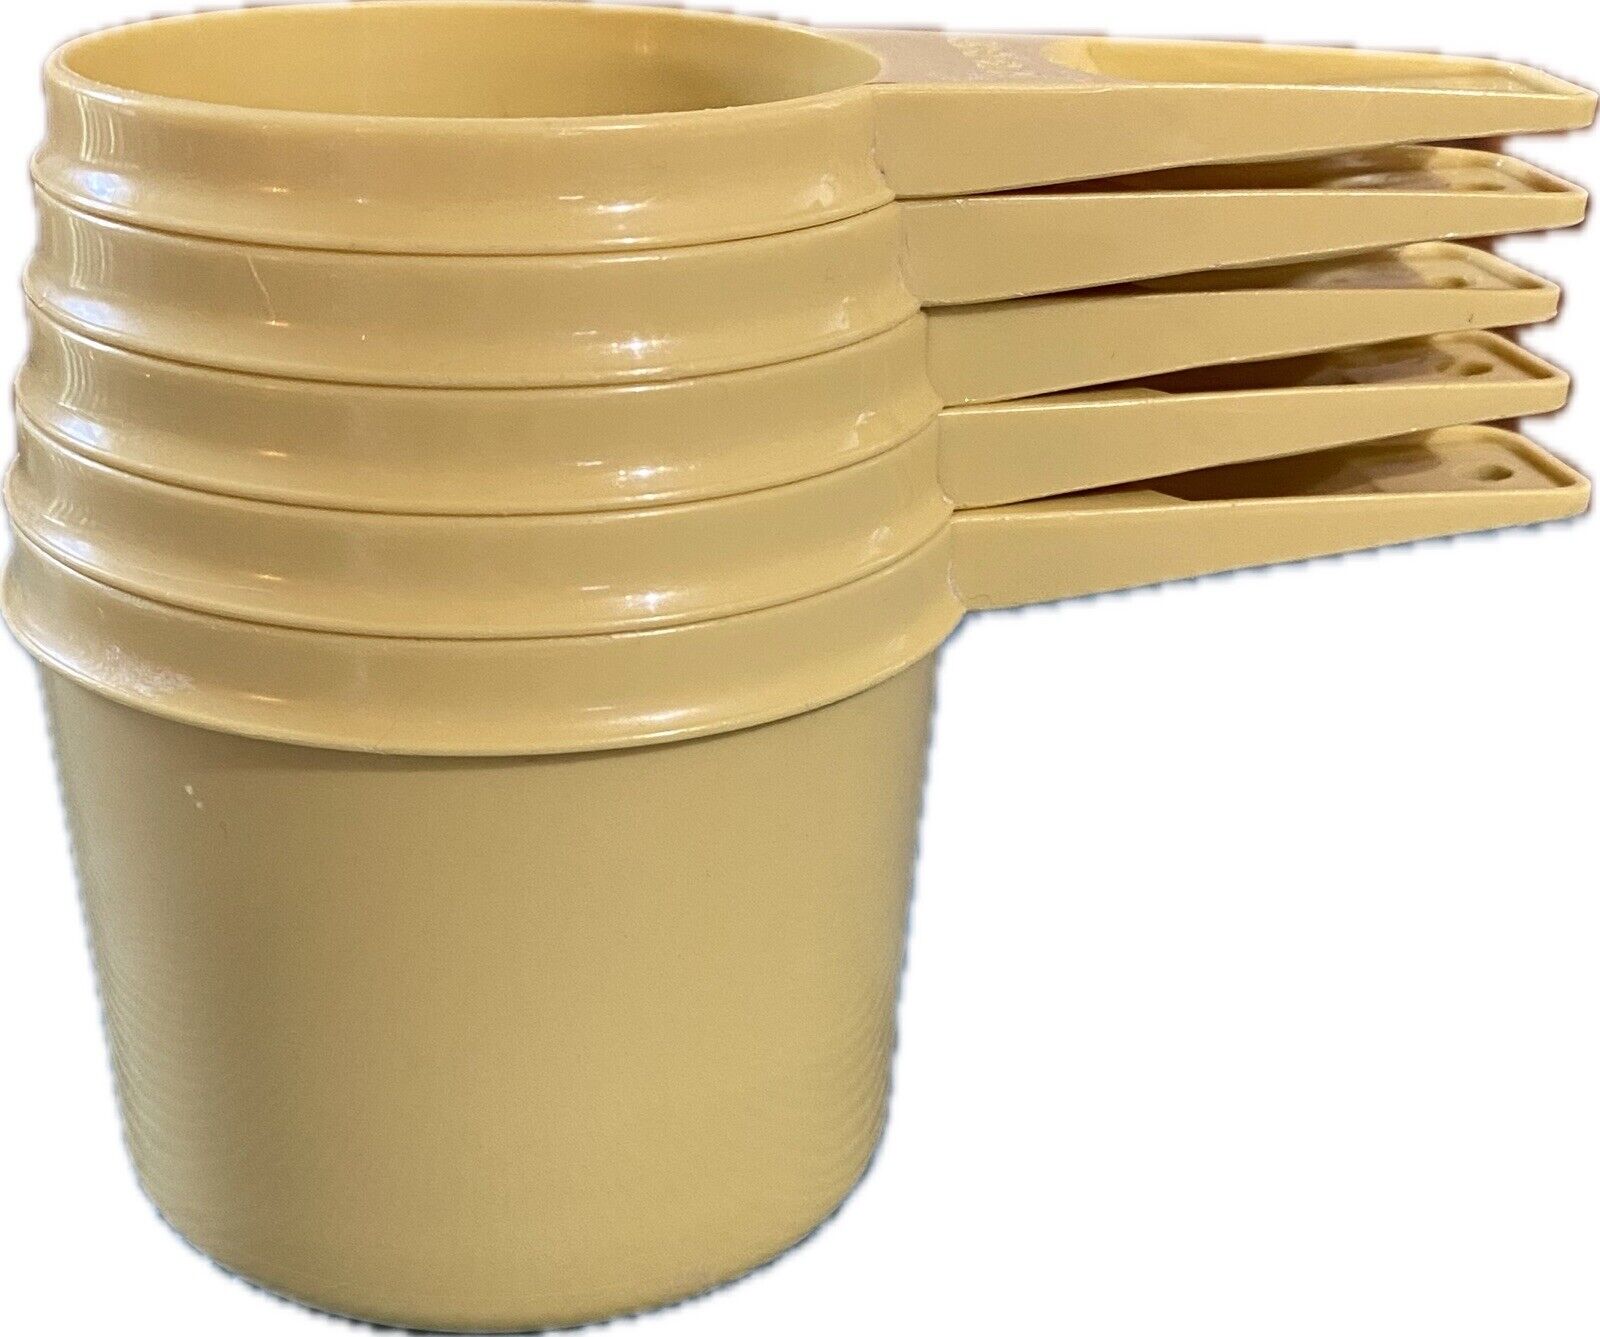 Vintage Tupperware Measuring Cups Set of 5 Yellow 761 762, 763, 764, 765